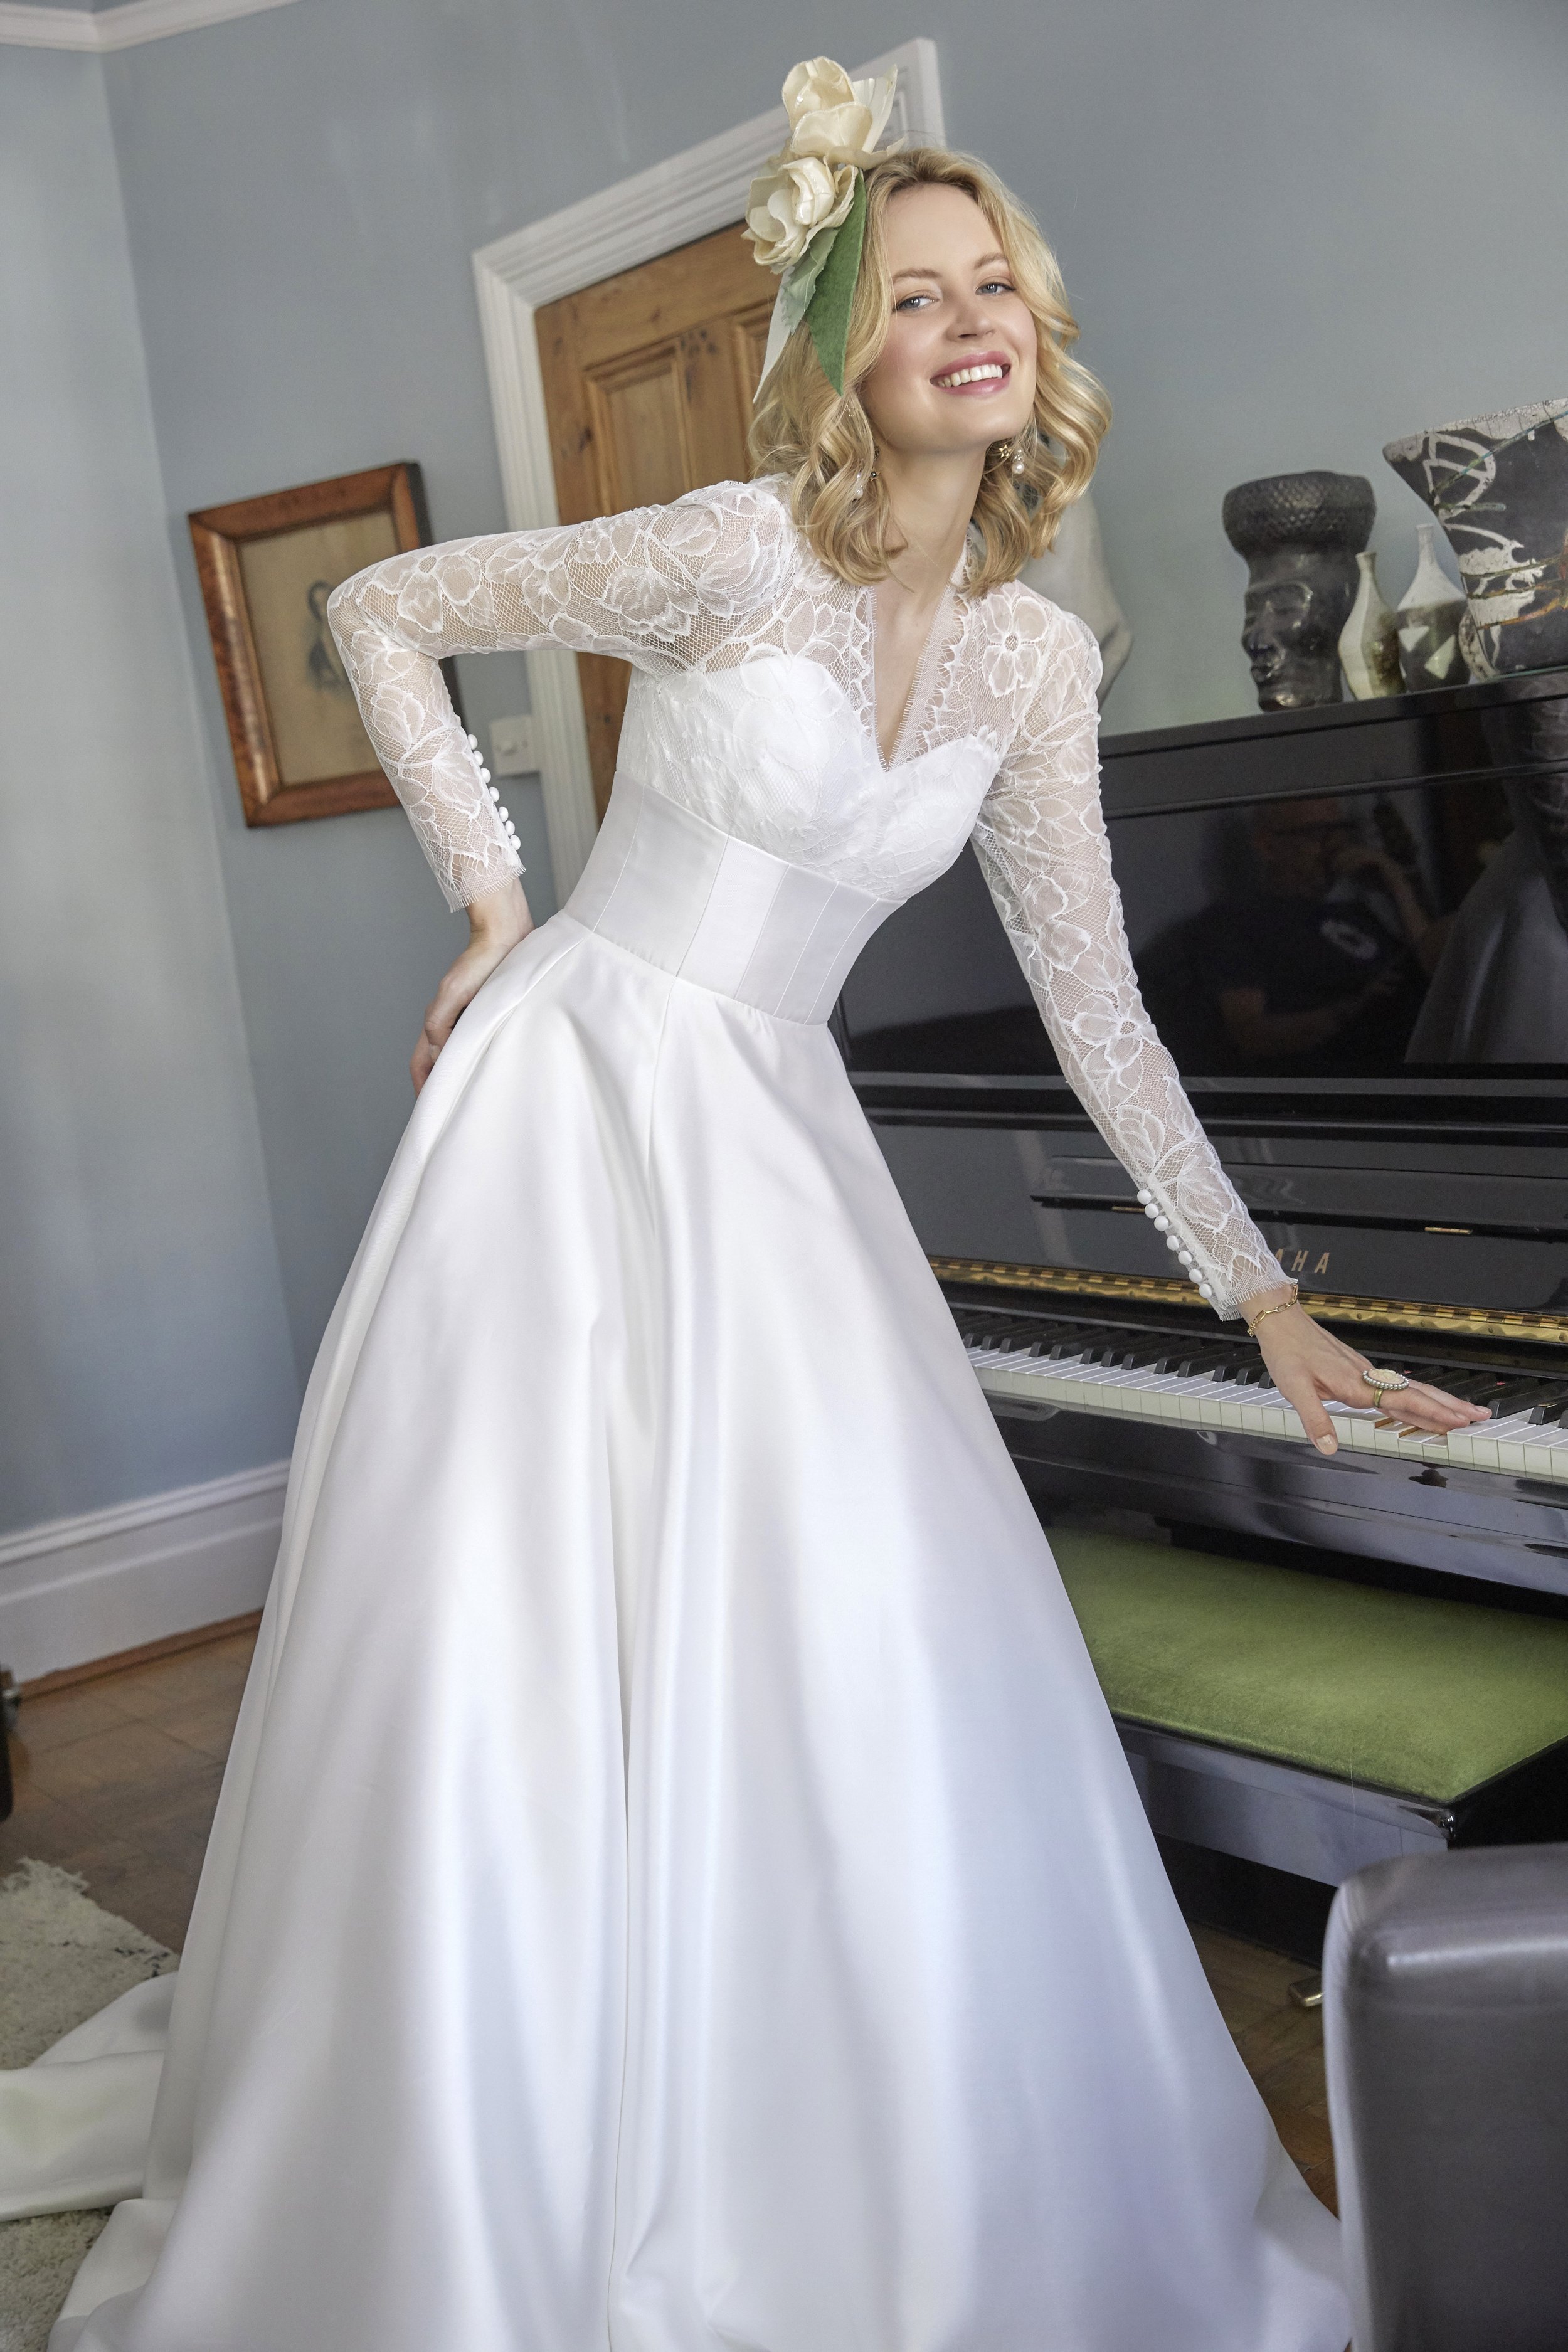 Modern Simple and Elegant Bridal Skirt Separates, High Waist